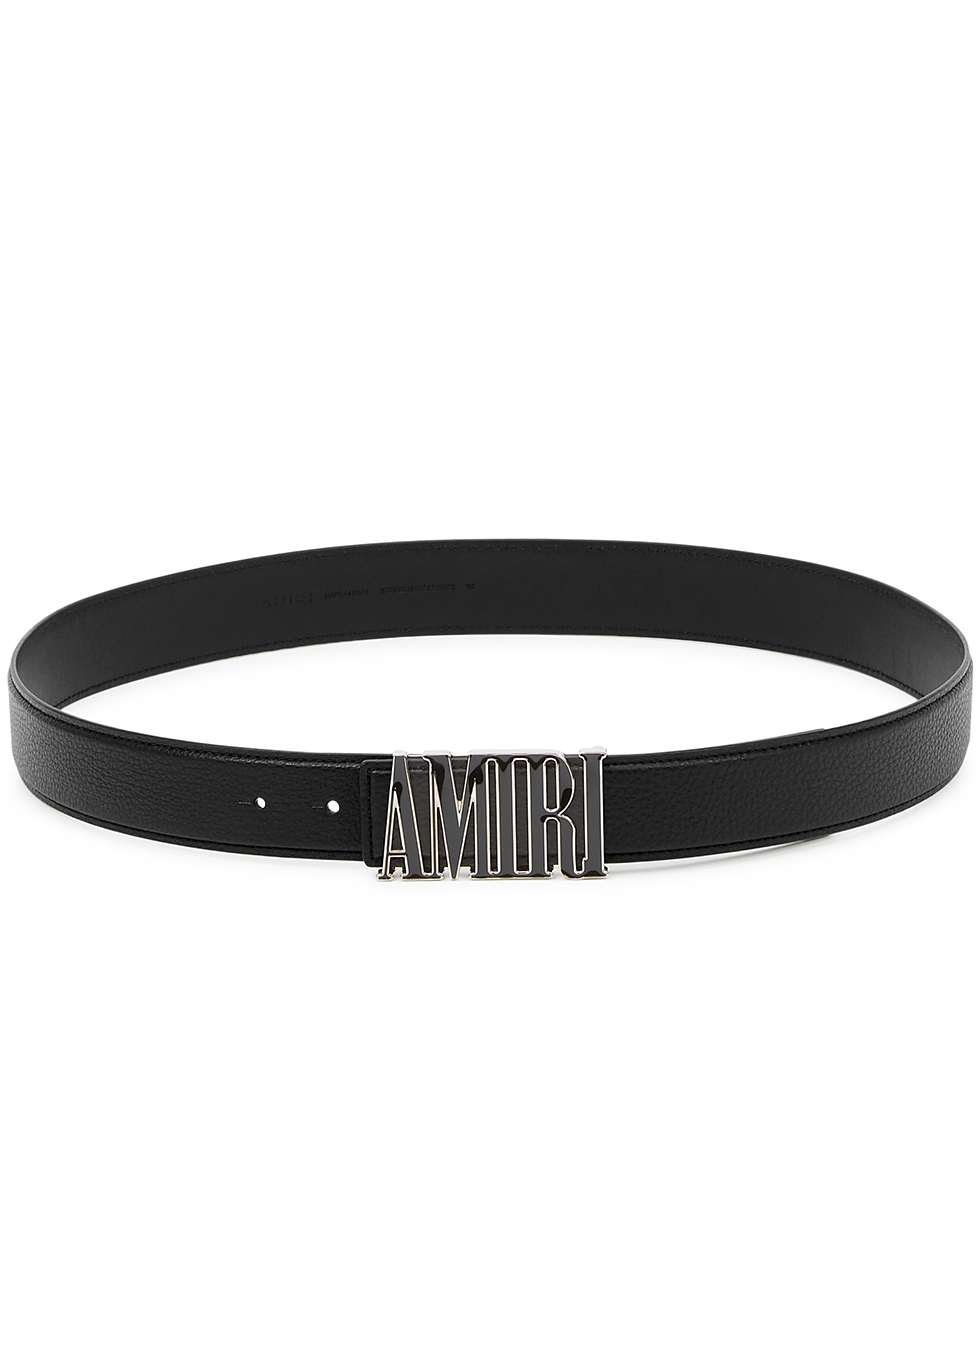 Black logo leather belt